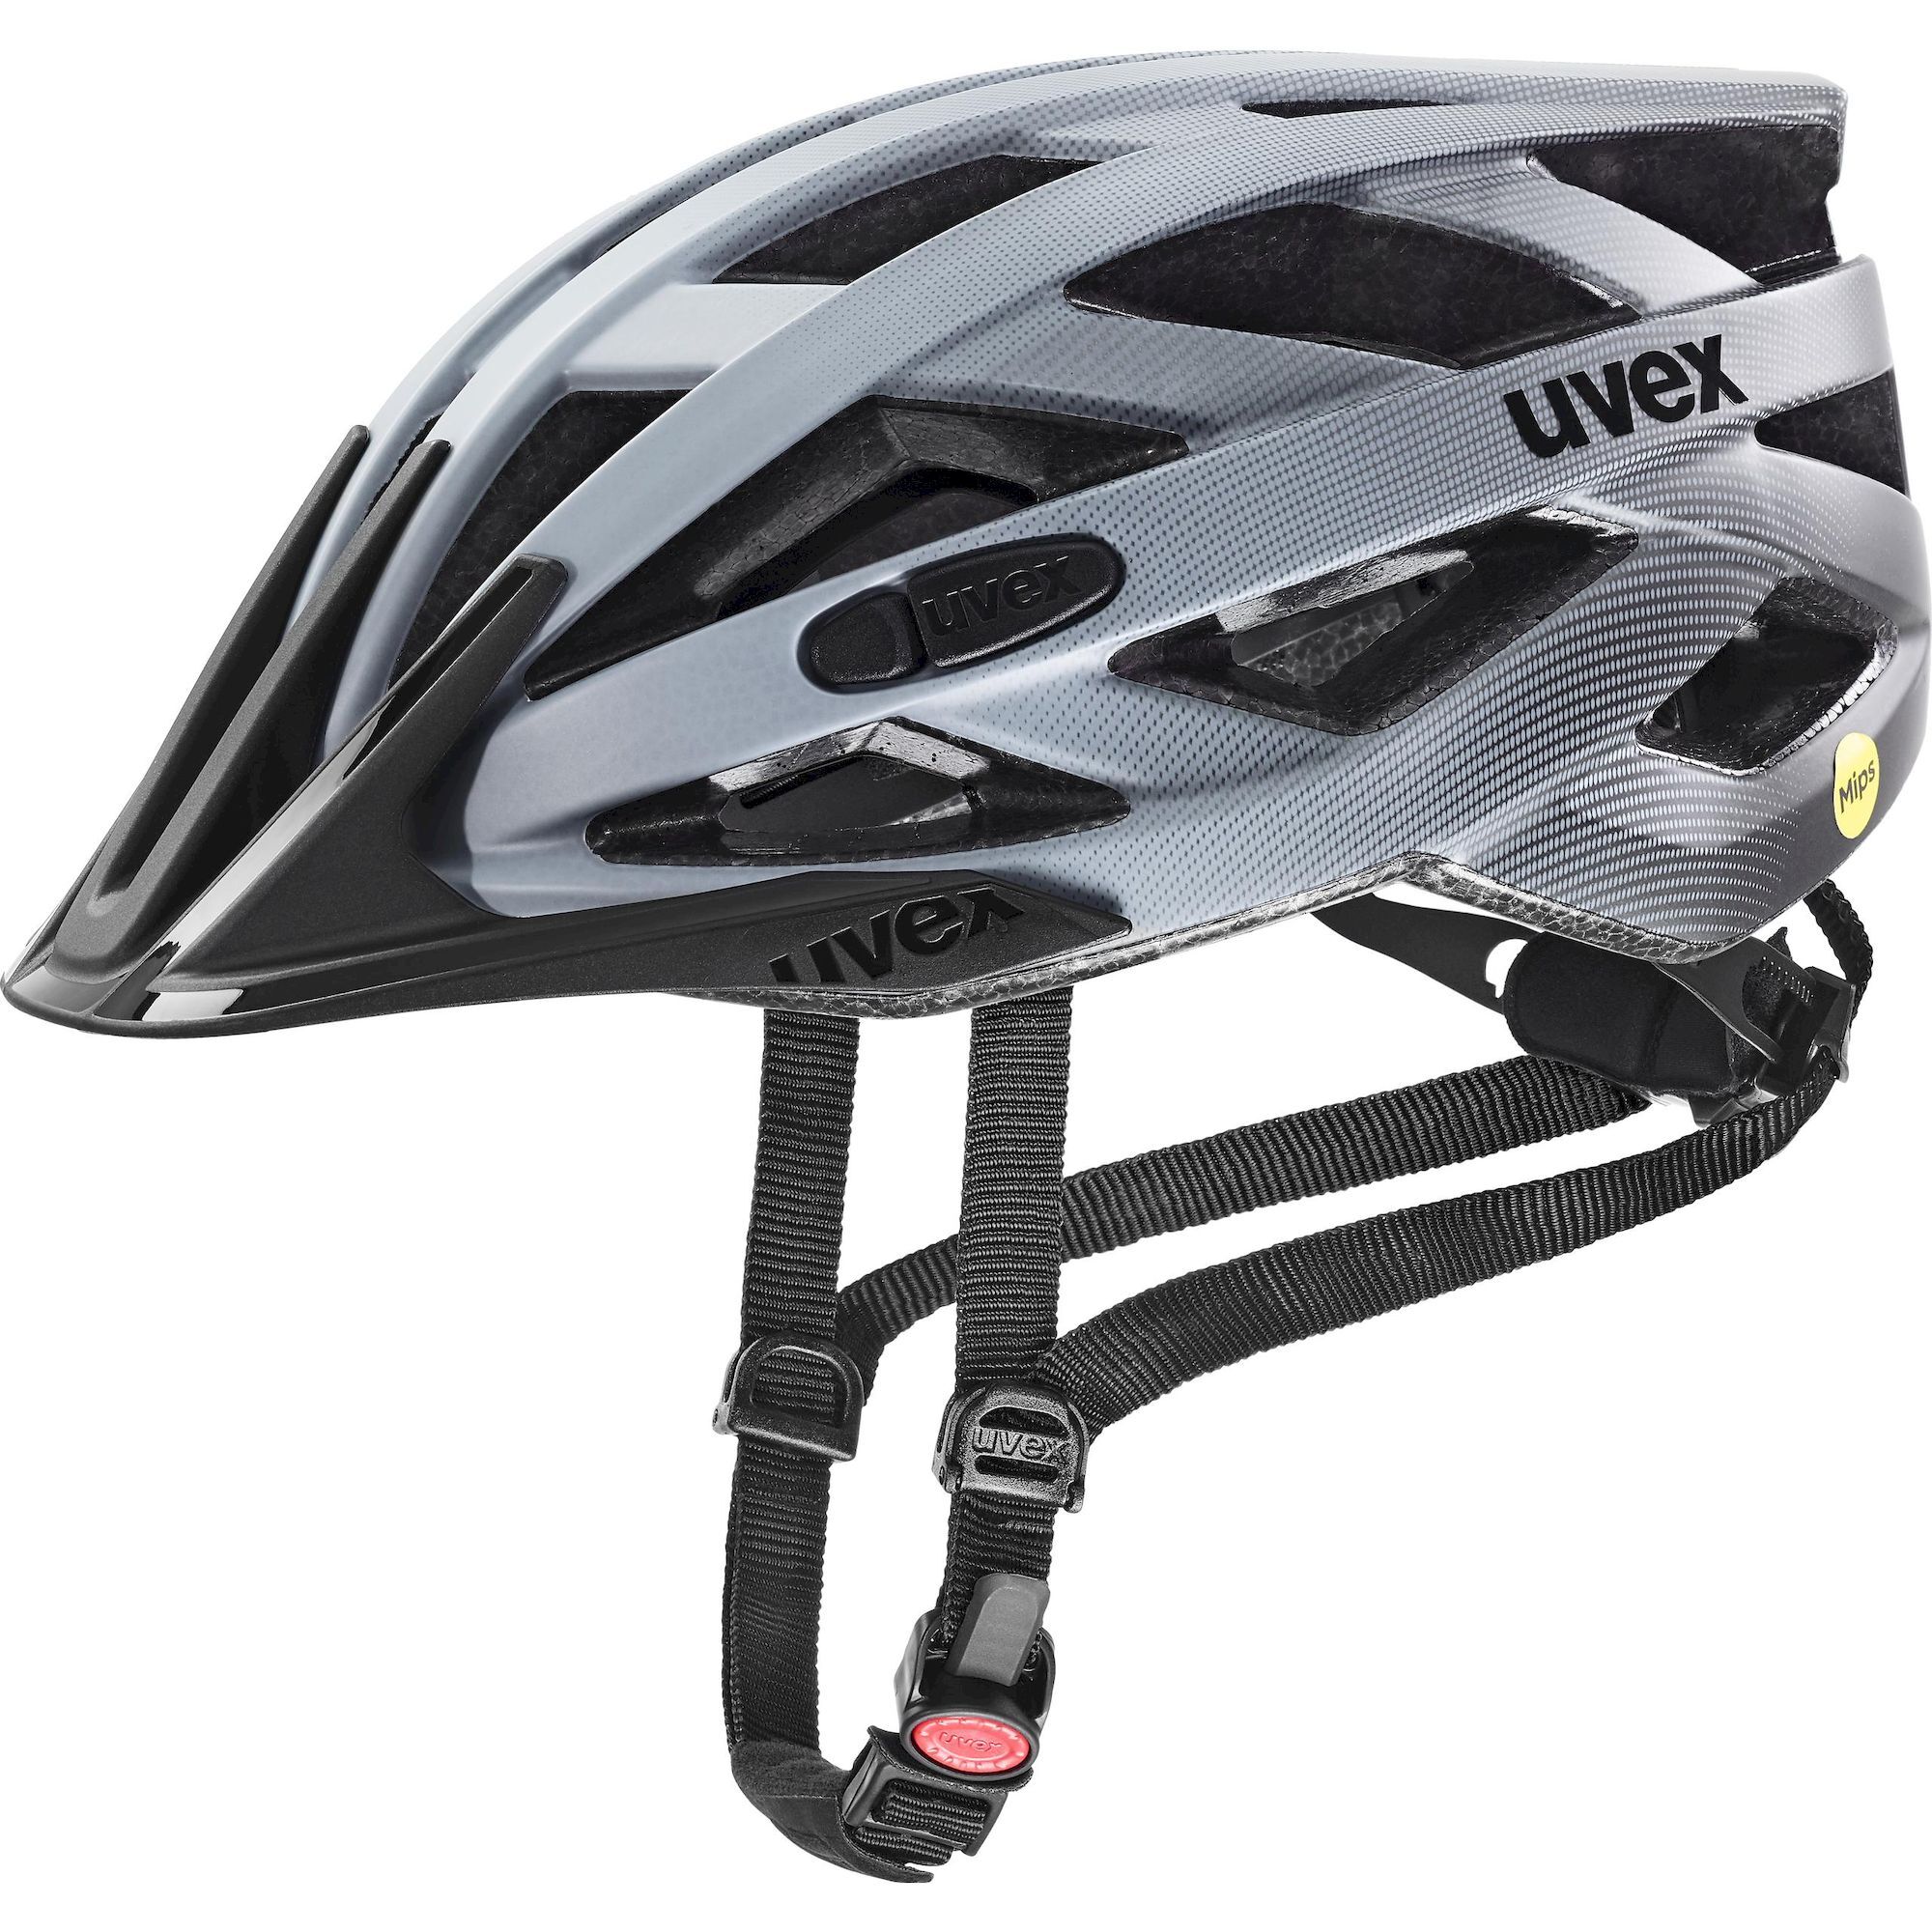 Uvex I-vo Cc MIPS - Casco bici da corsa